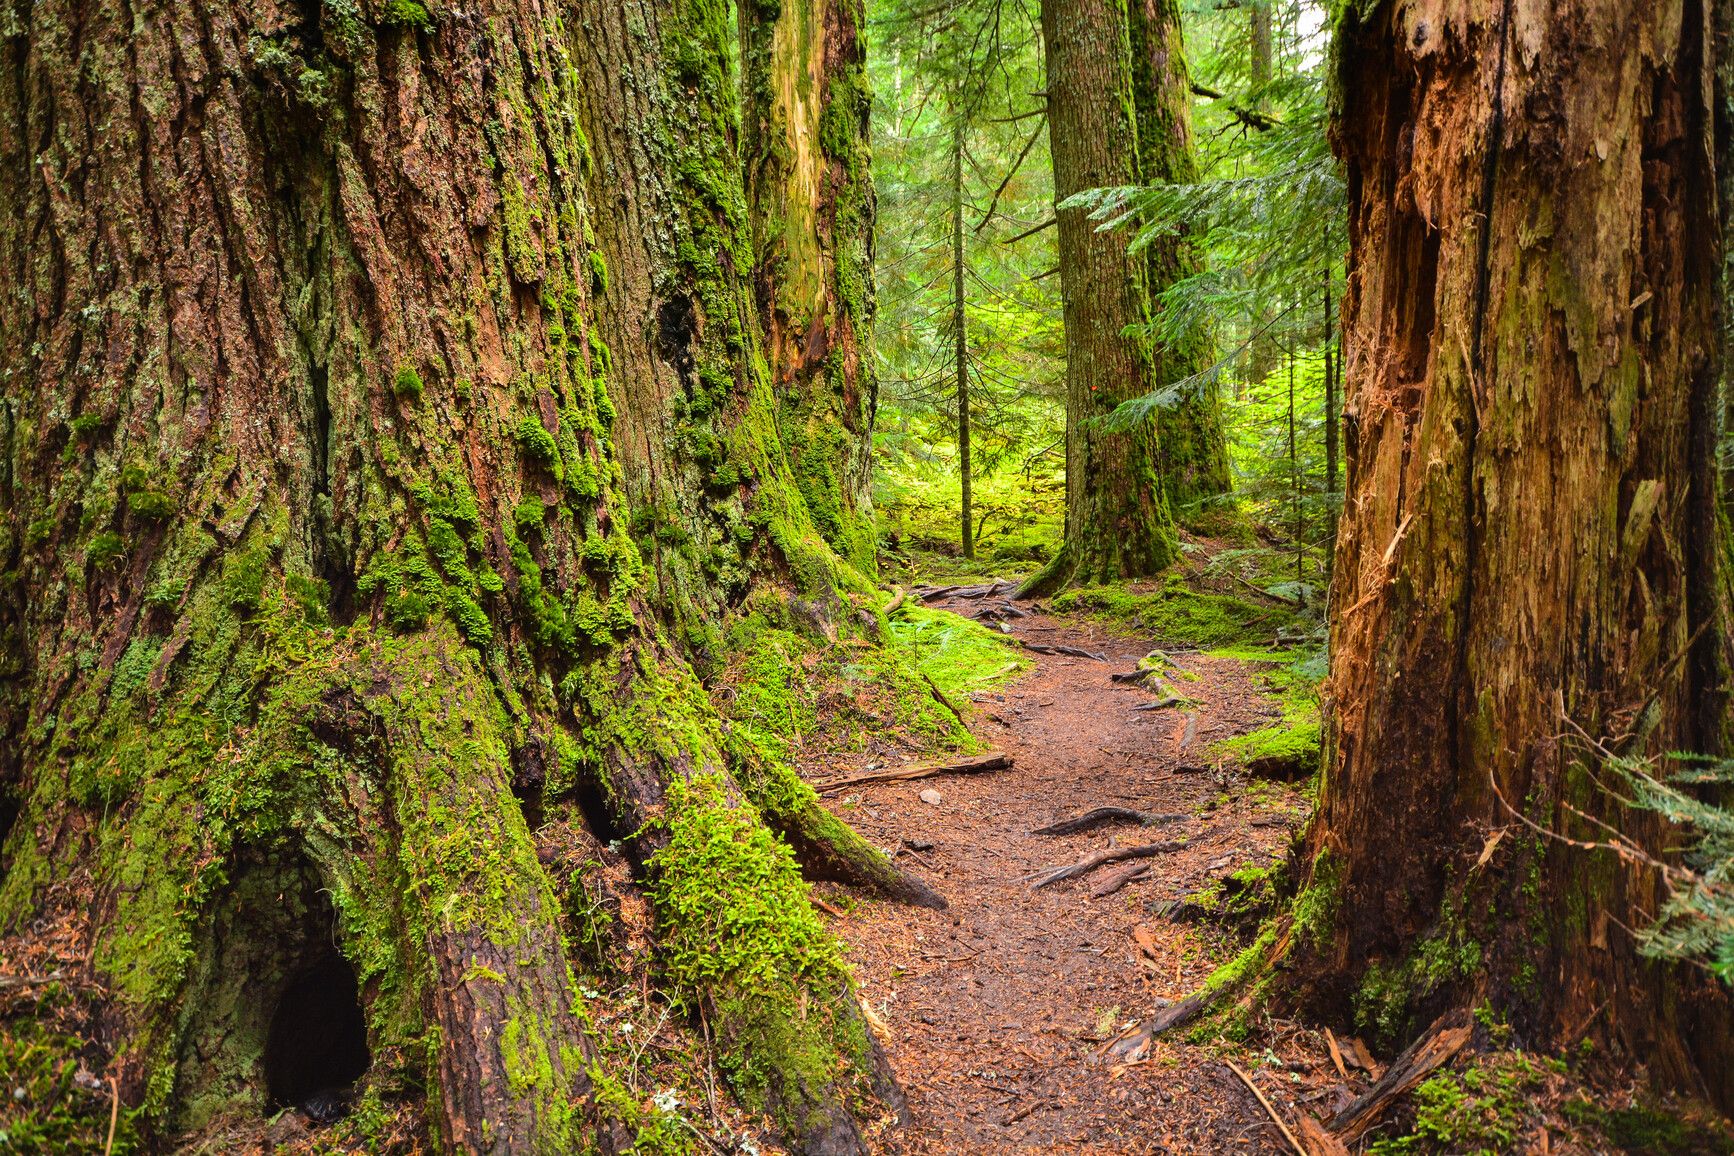 Forest trail through giants in Sx̱ótsaqel/Chilliwack Lake Park.